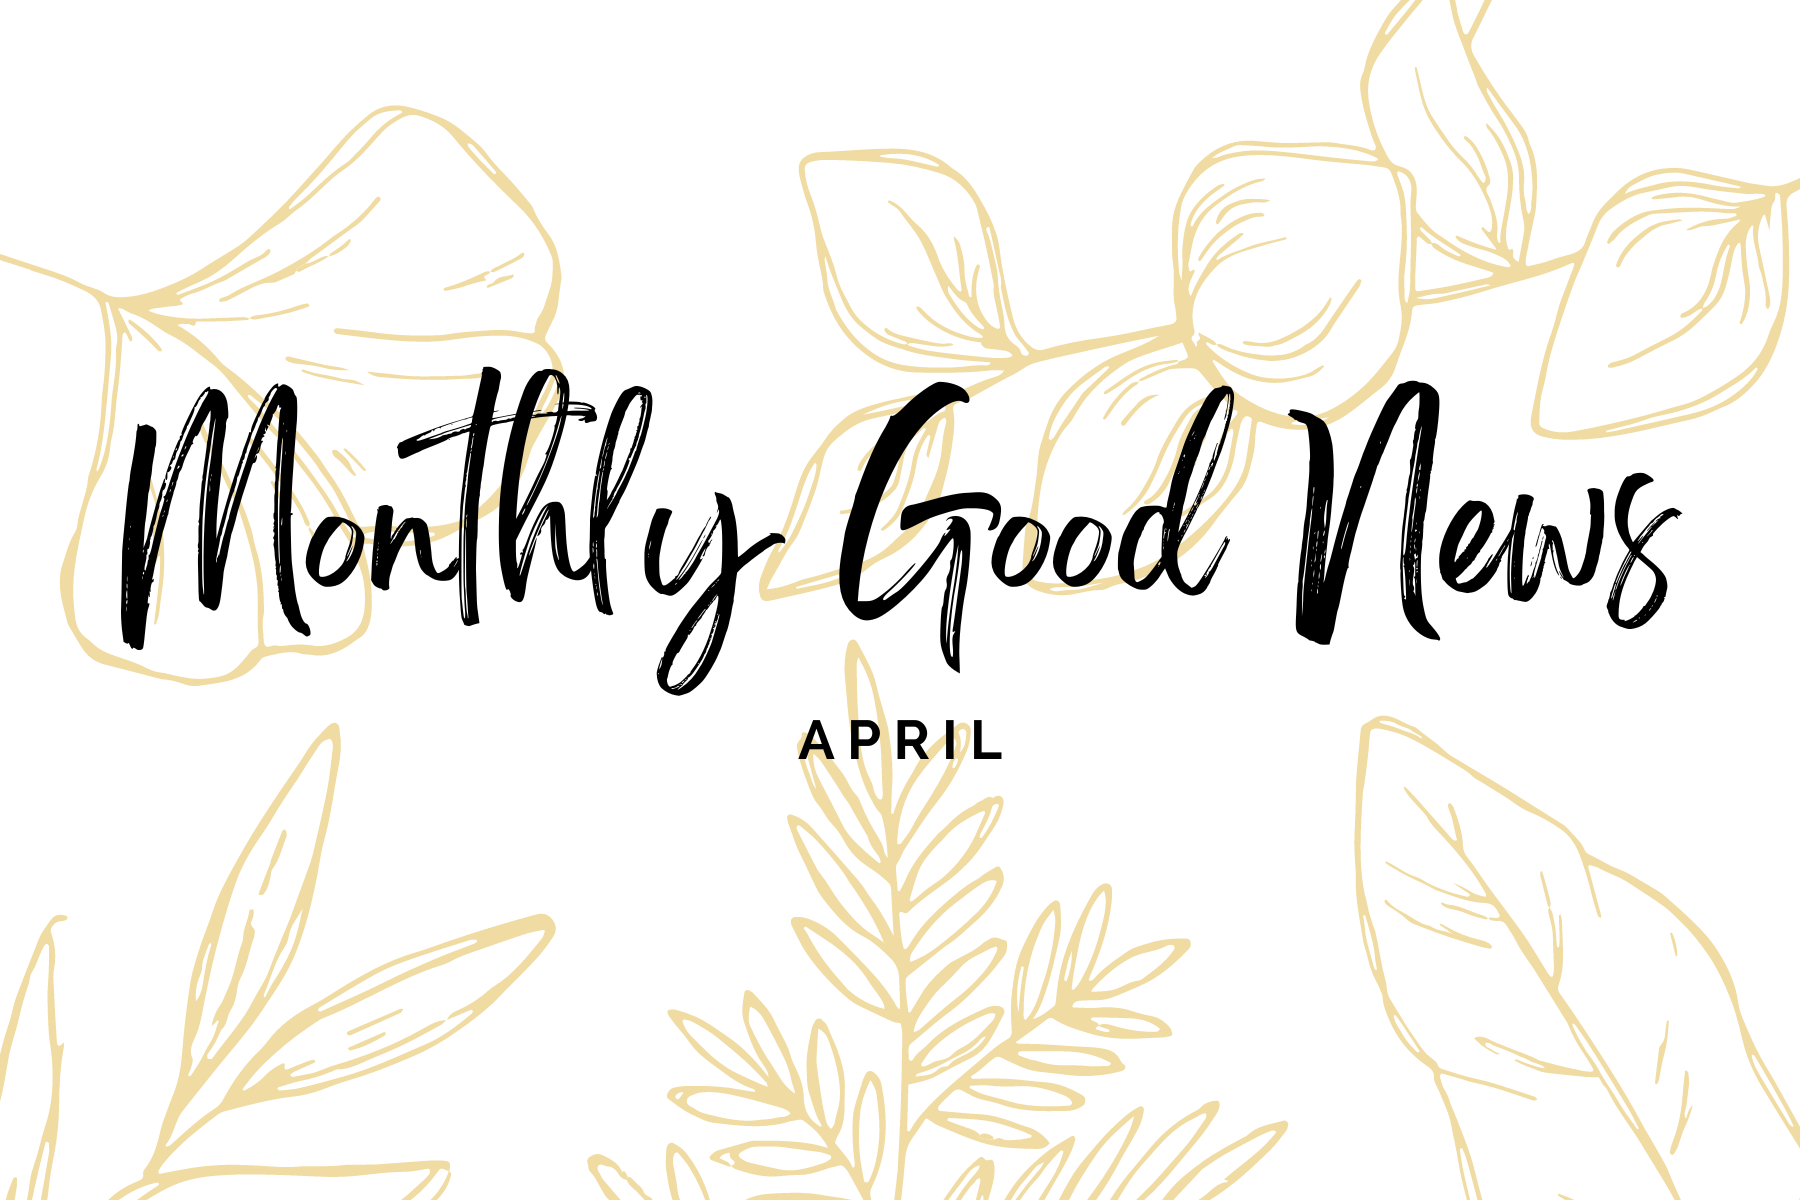 Monthly Good News #8: April